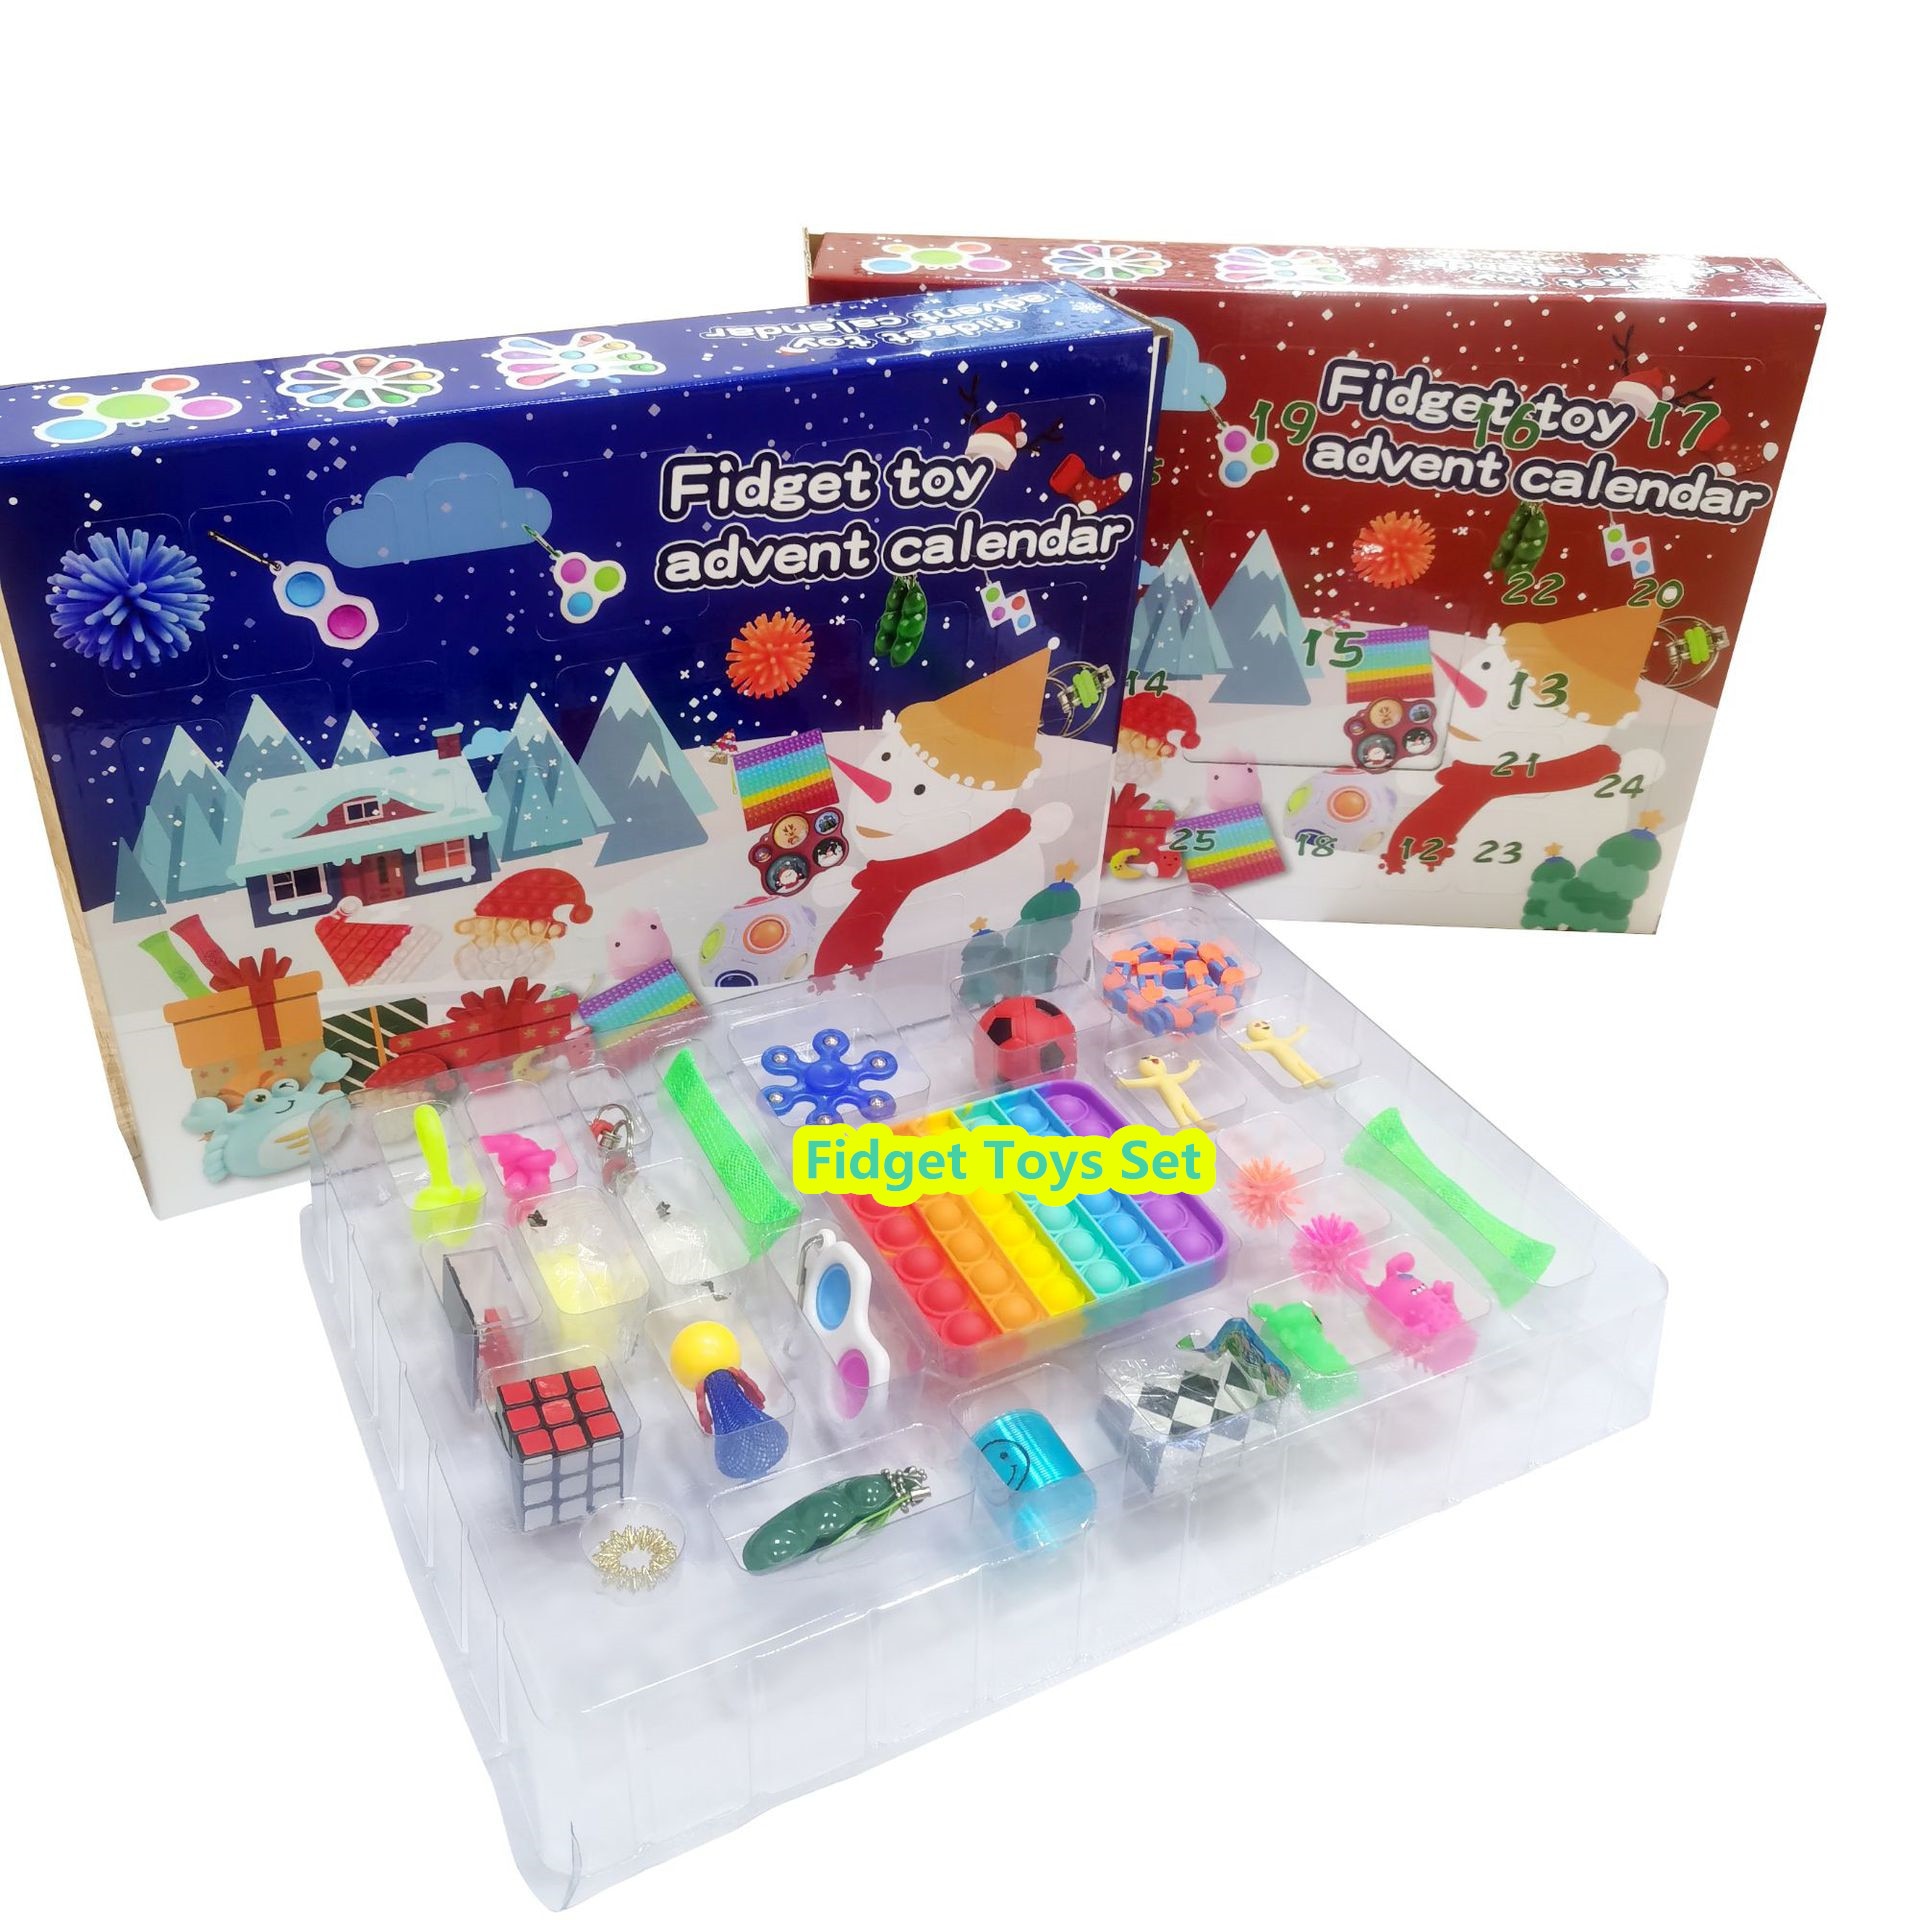 Fidget Toys Pack Set 100 Pack Squid Game Christmas Advent Calendar Anti Stress Relief Figet Toy 3 - Simple Dimple Fidget